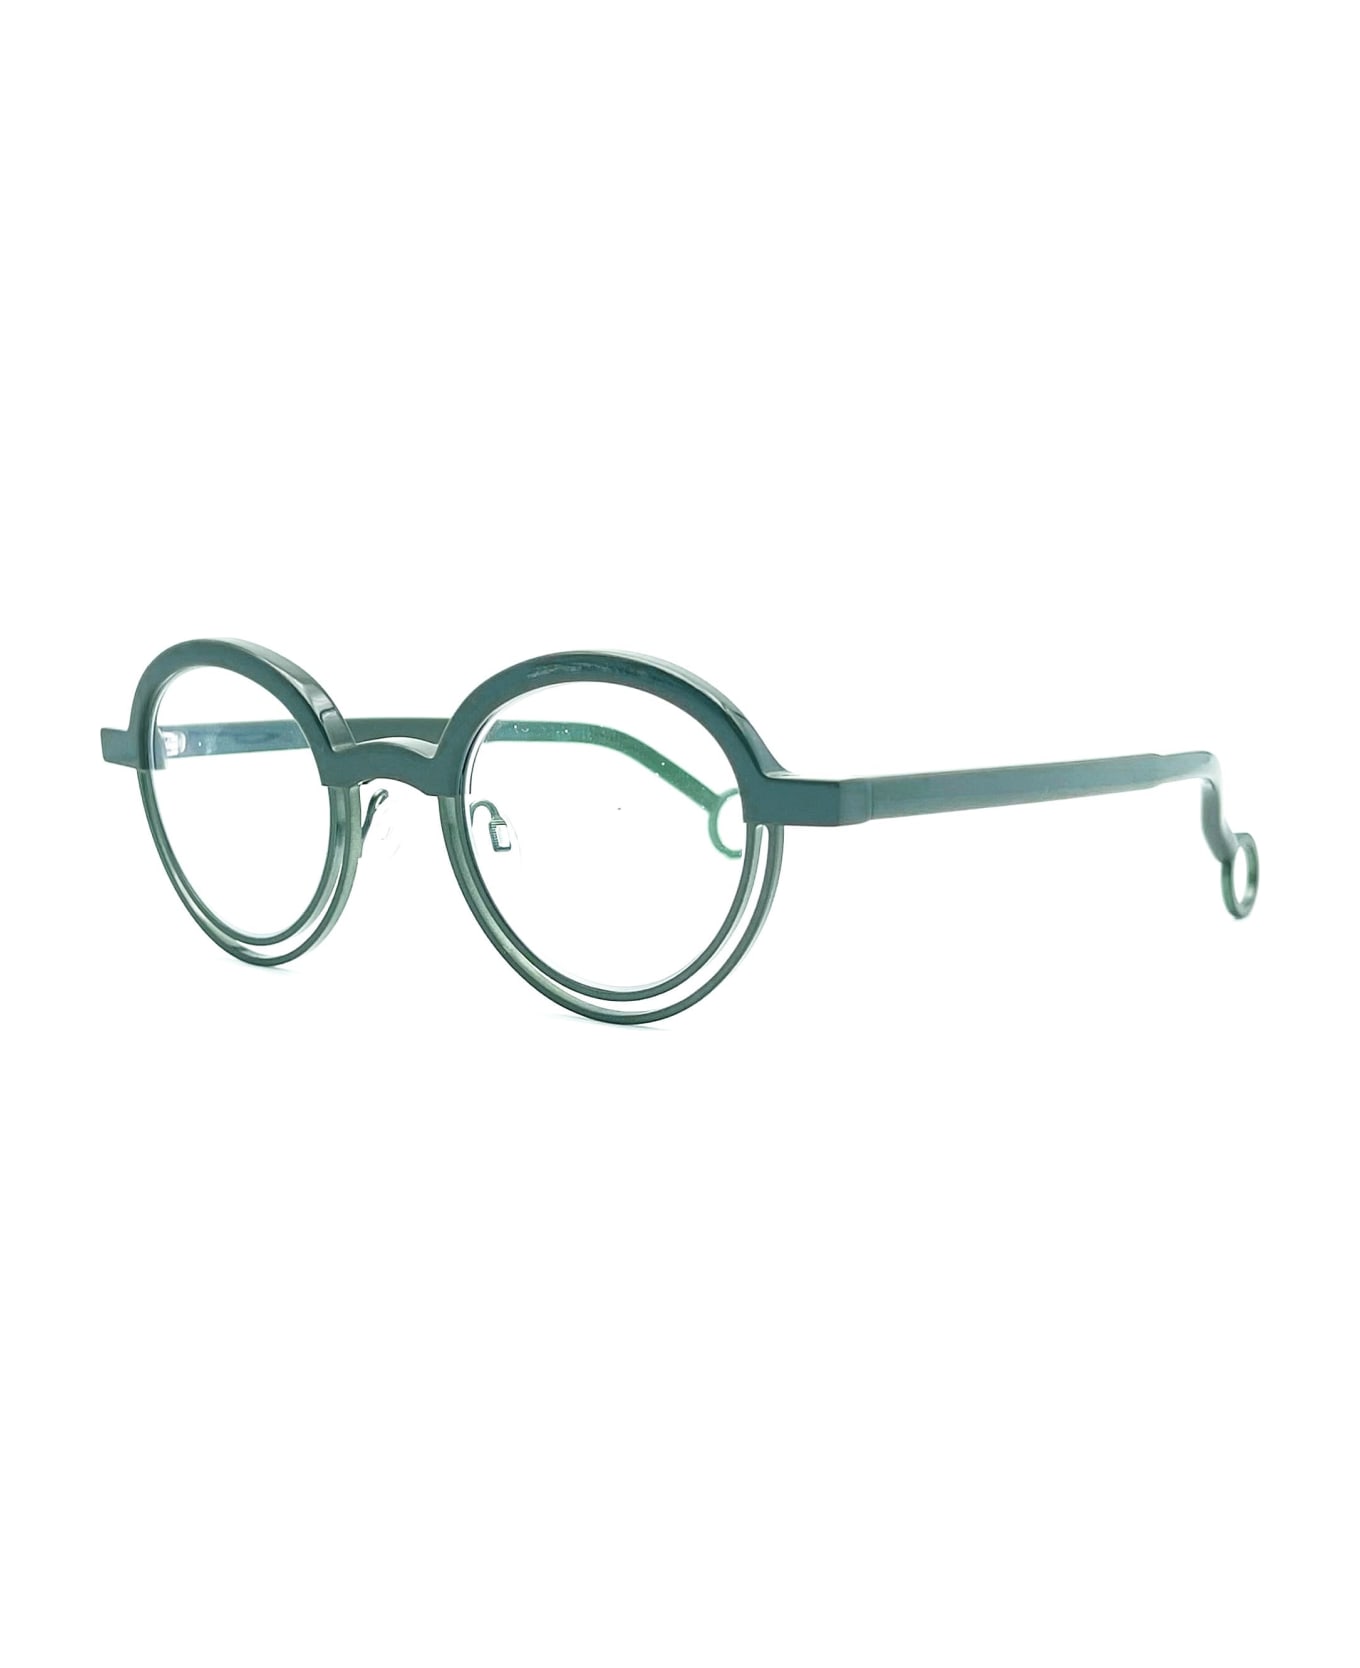 Theo Eyewear Bumper - 10 Glasses - green アイウェア